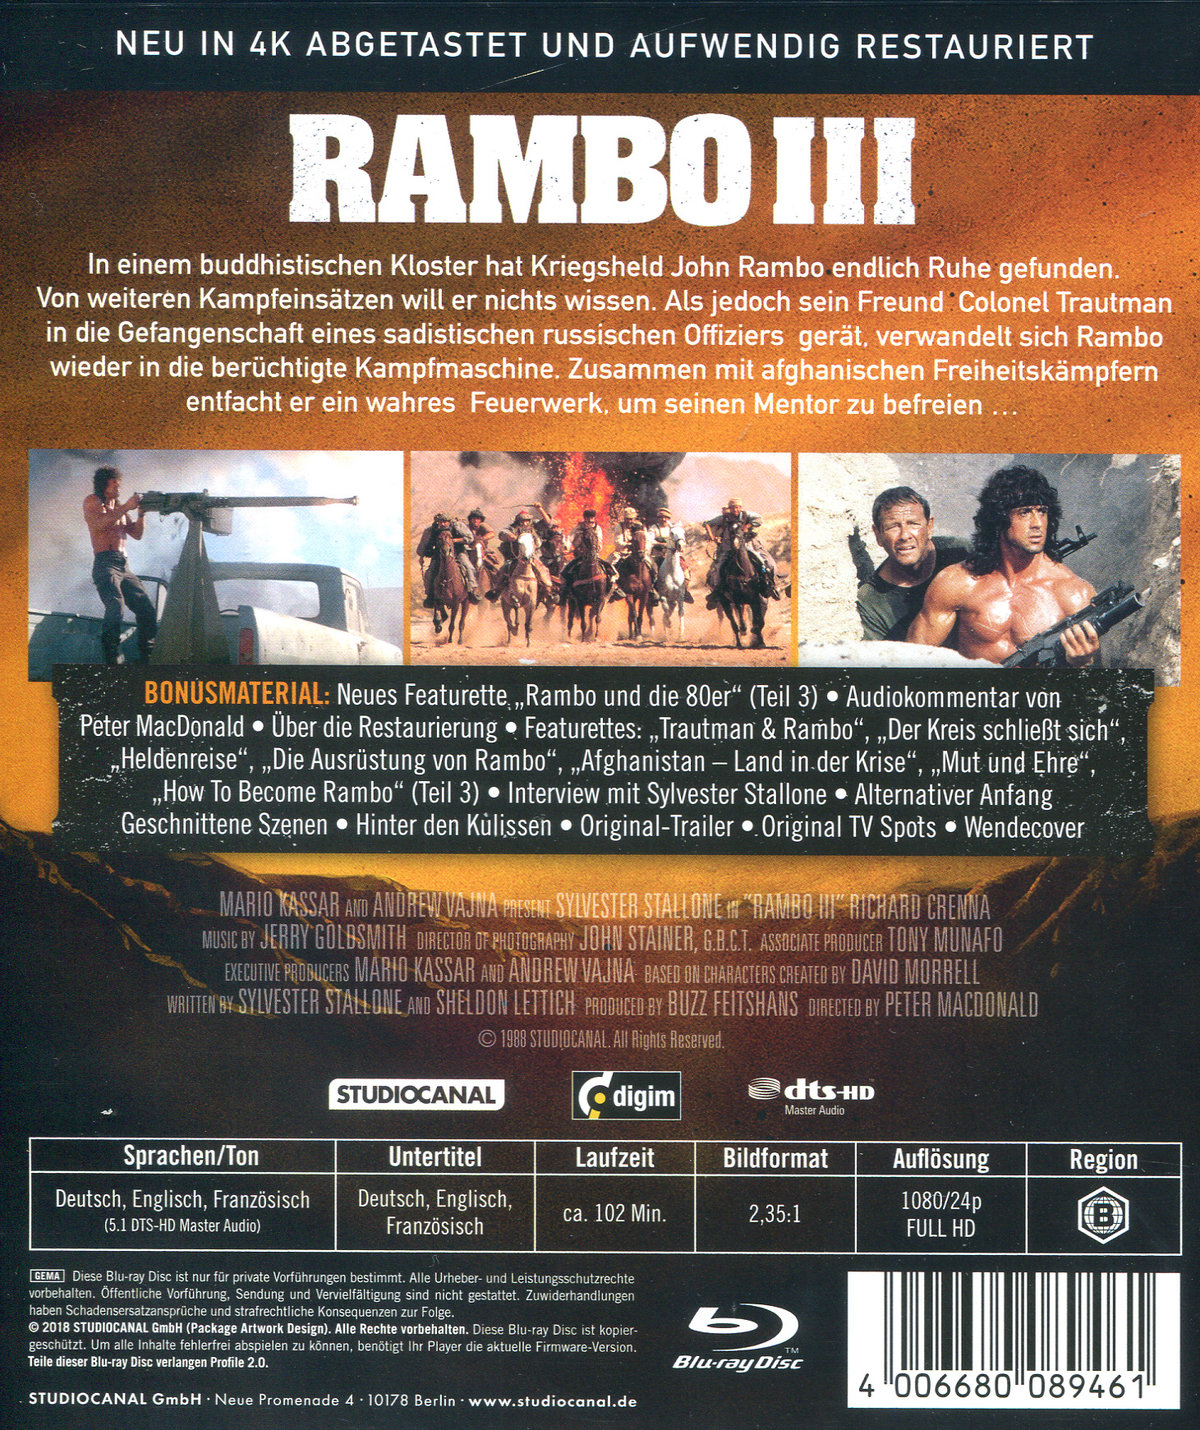 Rambo 3 - Uncut (blu-ray)